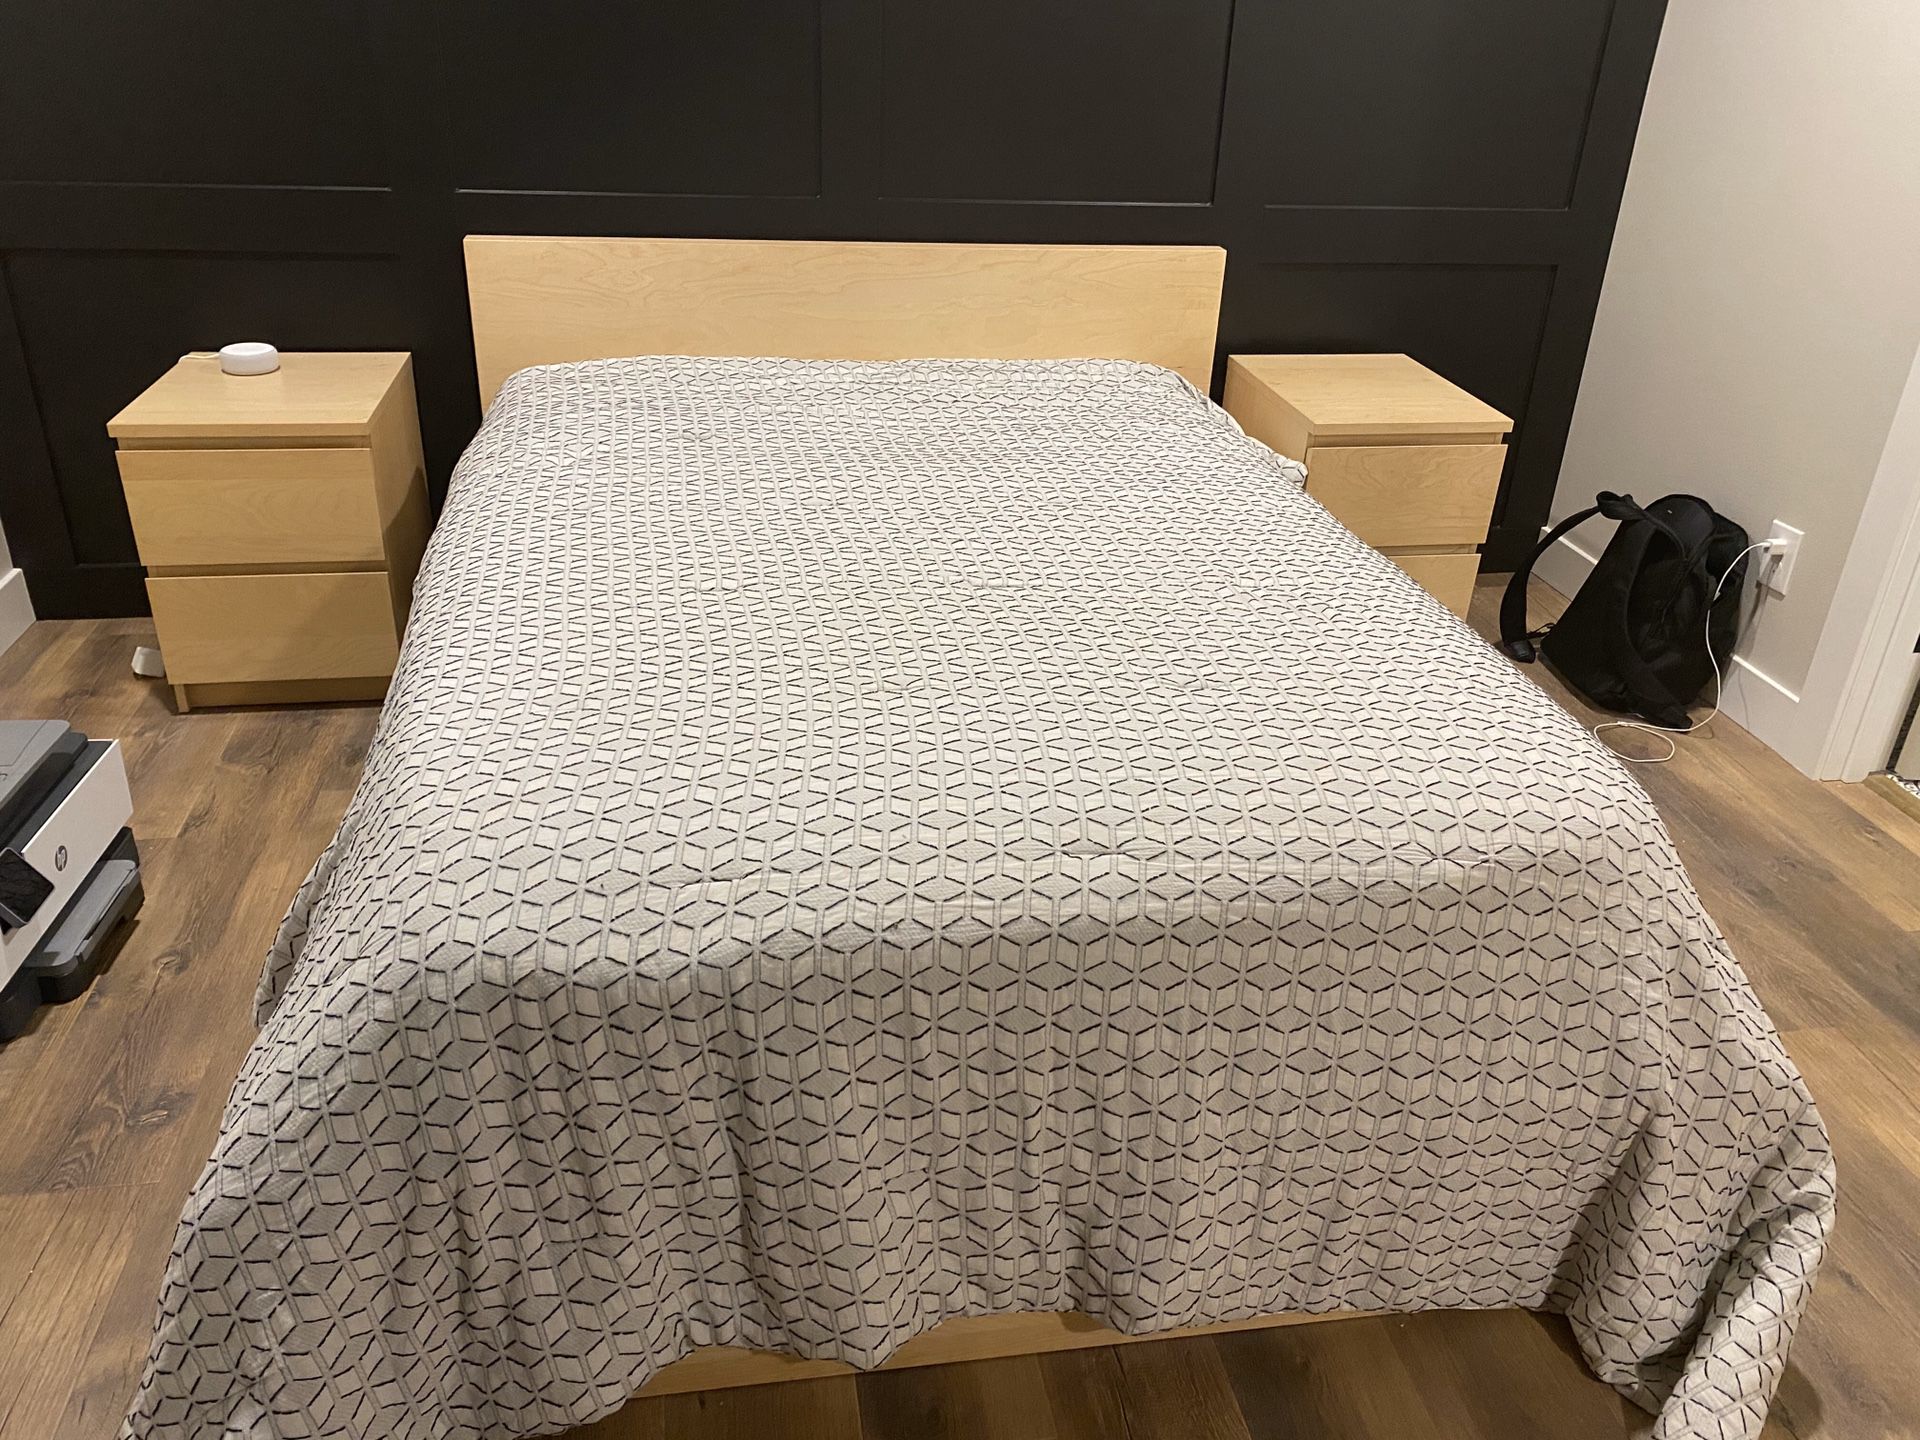 IKEA Malm full size bedroom set